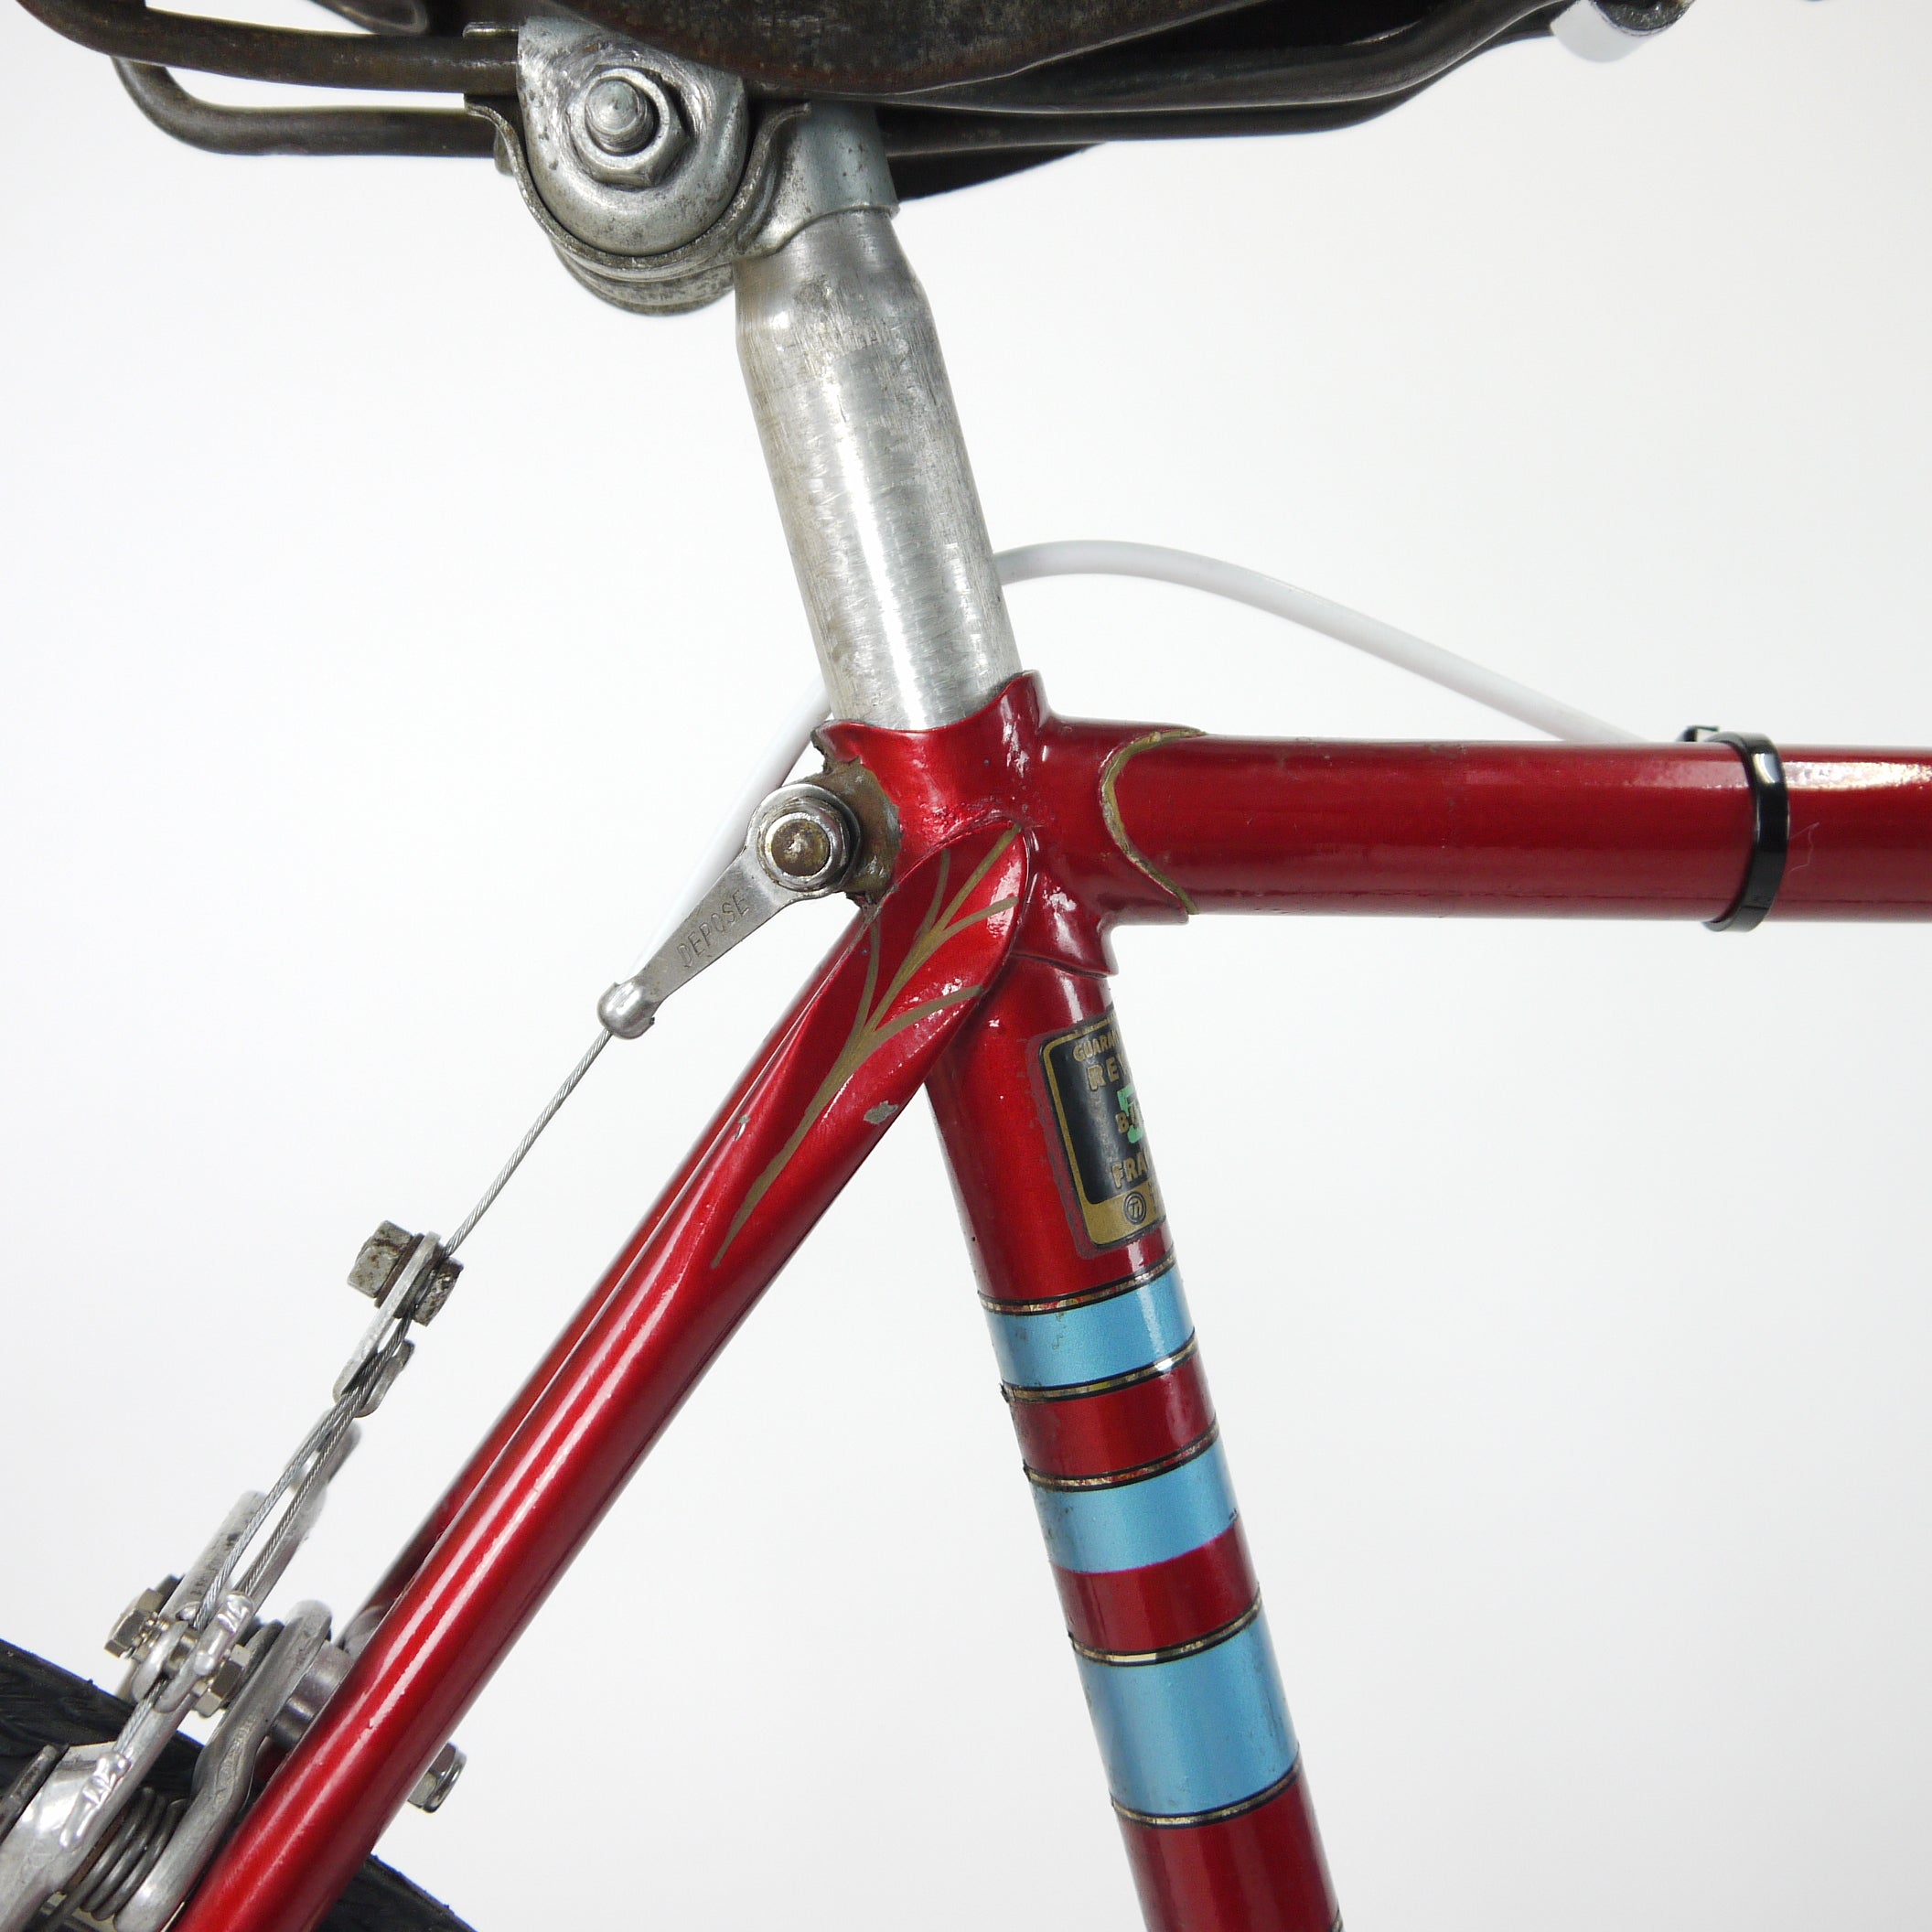 A red Dawes Mirage road bike seat clamp